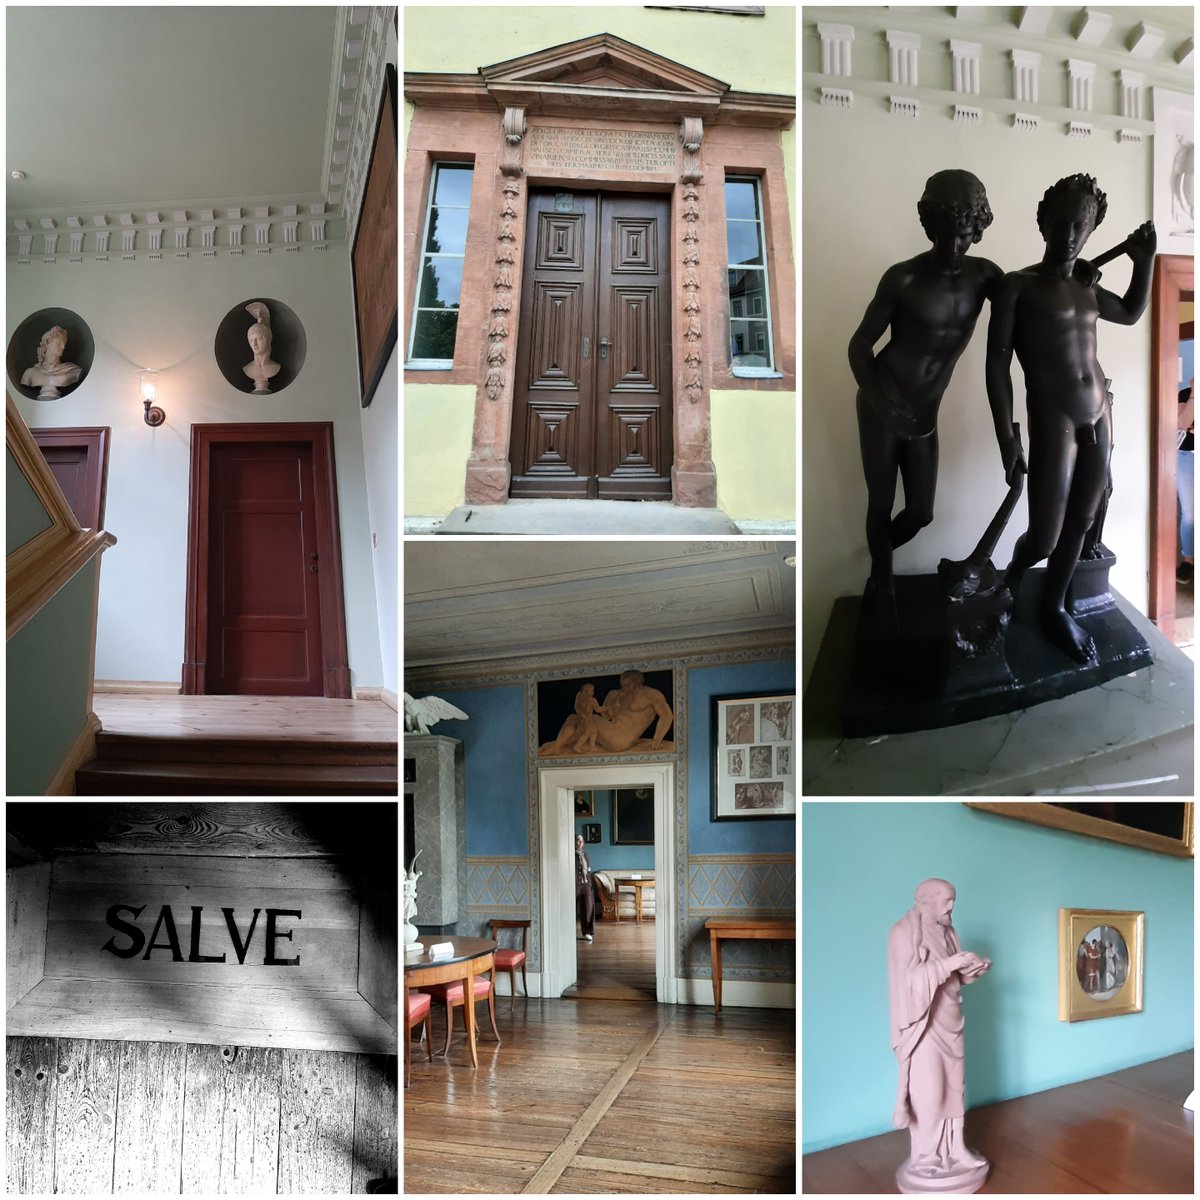 Museumstag.
Immer ein Erlebnis, wie hier im Goethe Haus in Weimar. 
#Museum